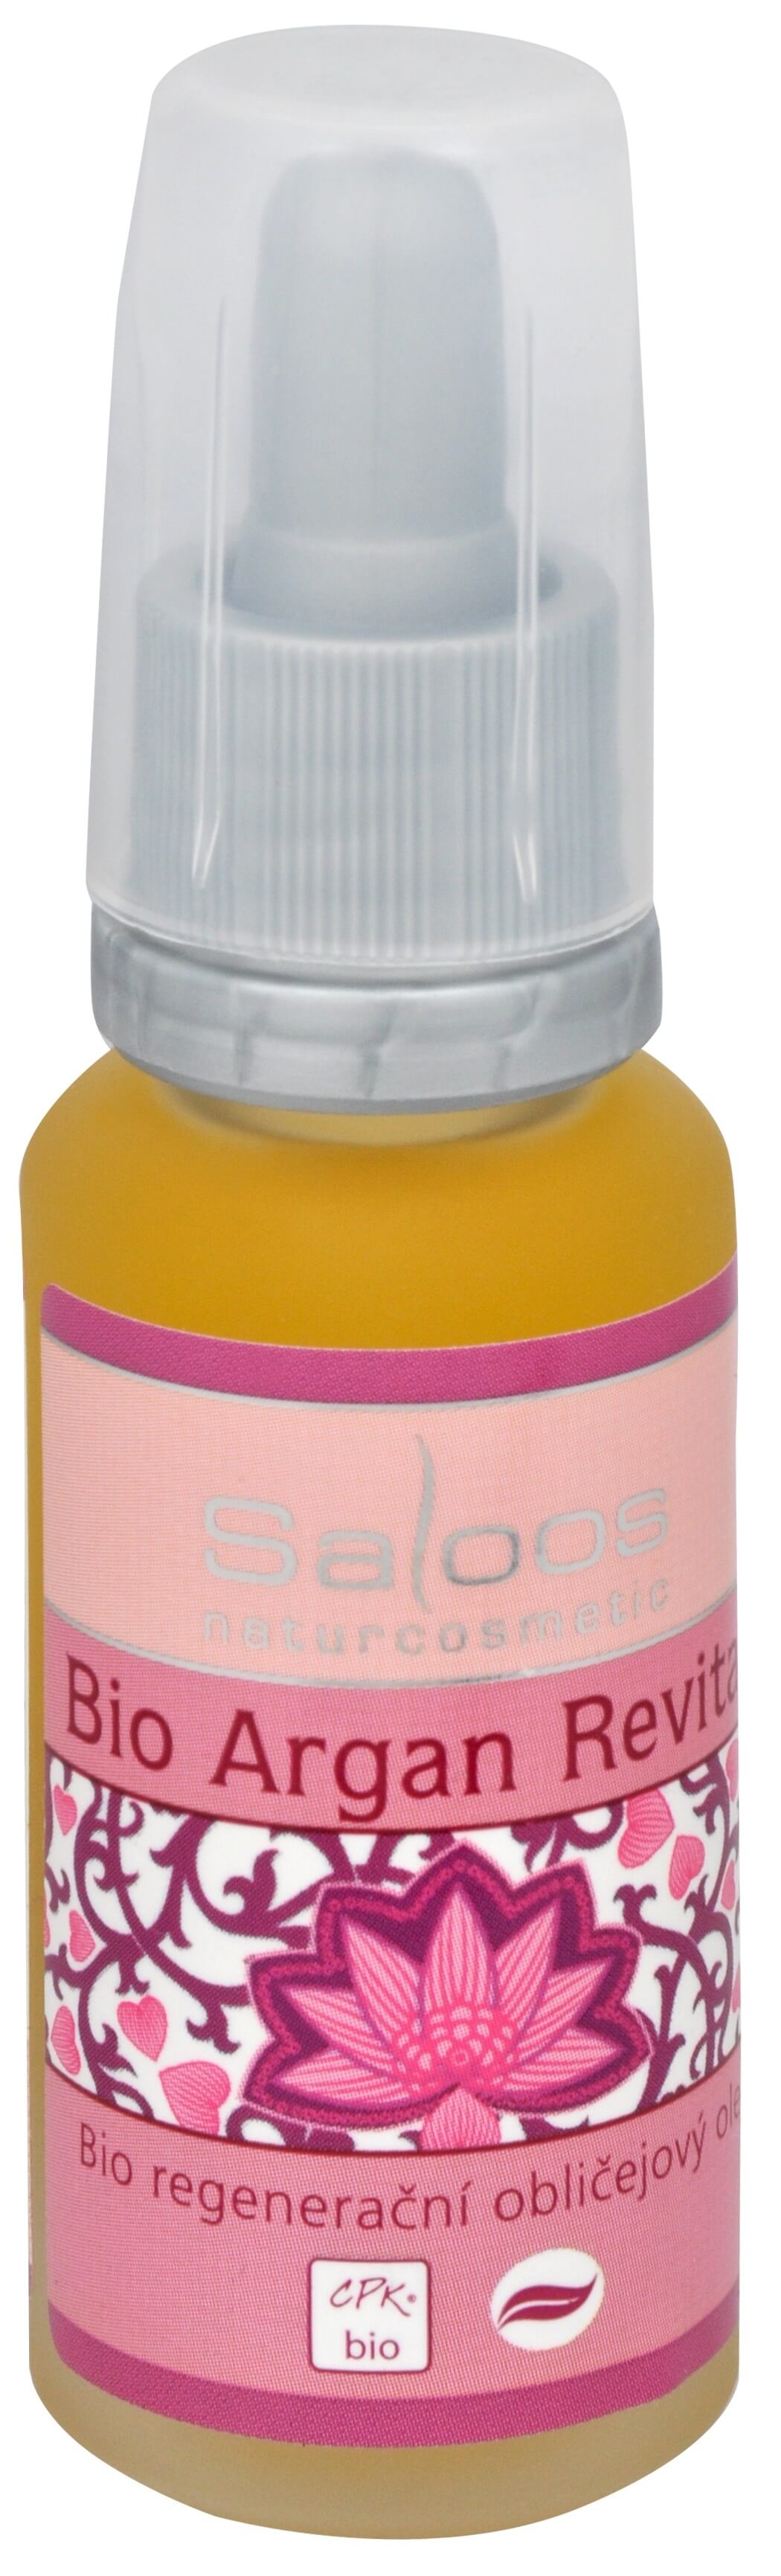 Zobrazit detail výrobku Saloos Bio regenerační obličejový olej - Argan Revital 100 ml